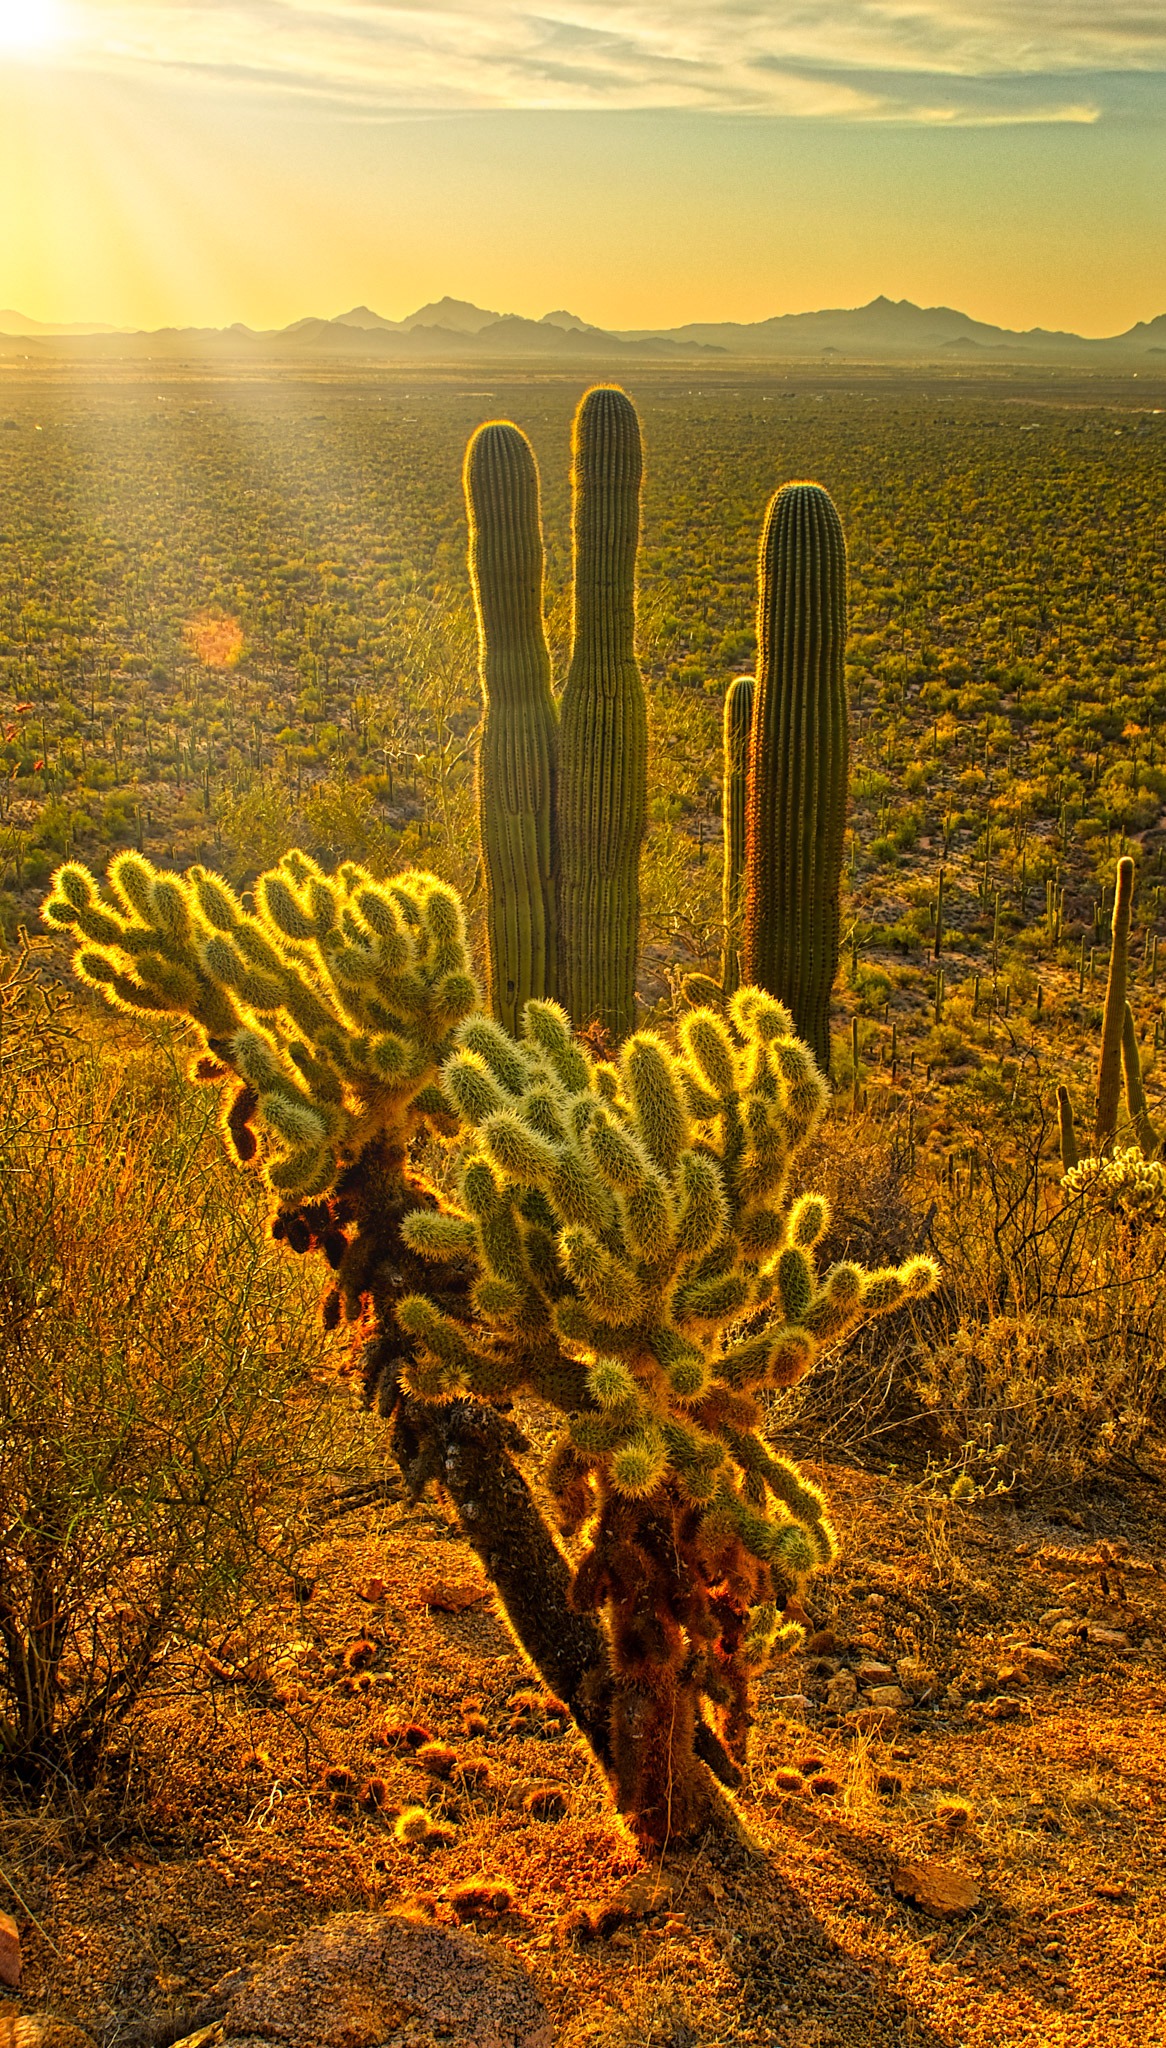 Saguaro Cactus and Teddy Bear Cholla in Saguaro National Park at sunset.